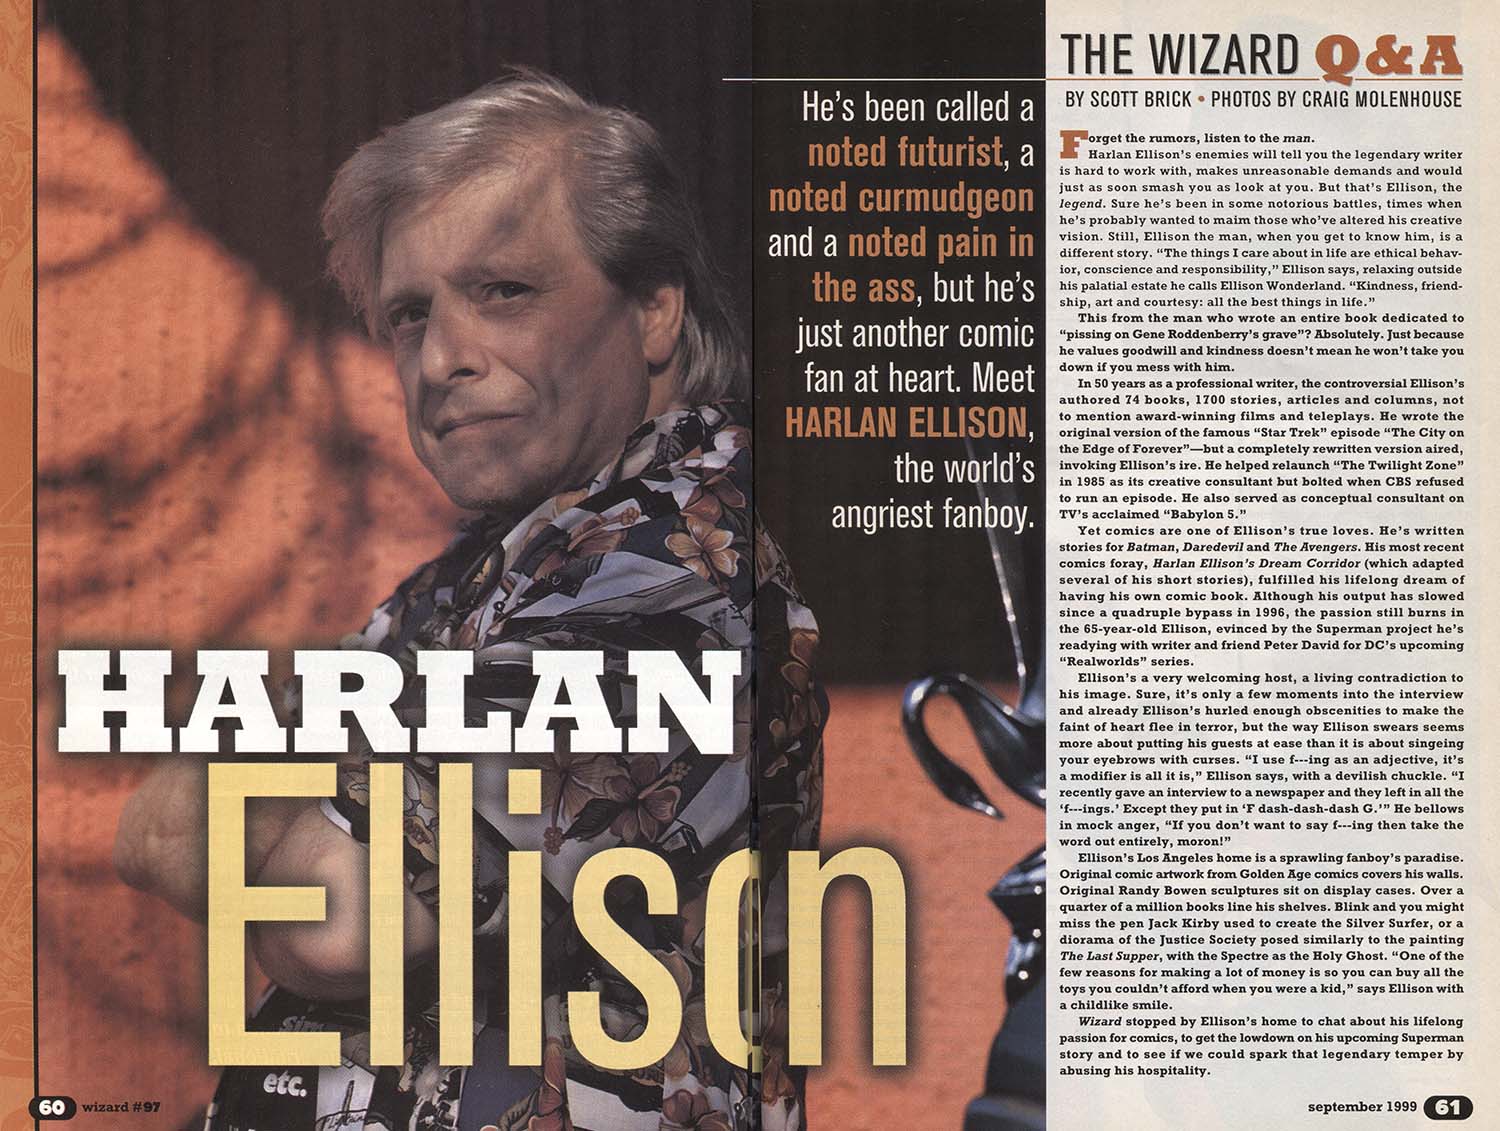 Wizard #97, Harlan Ellison: The Wizard Q&A